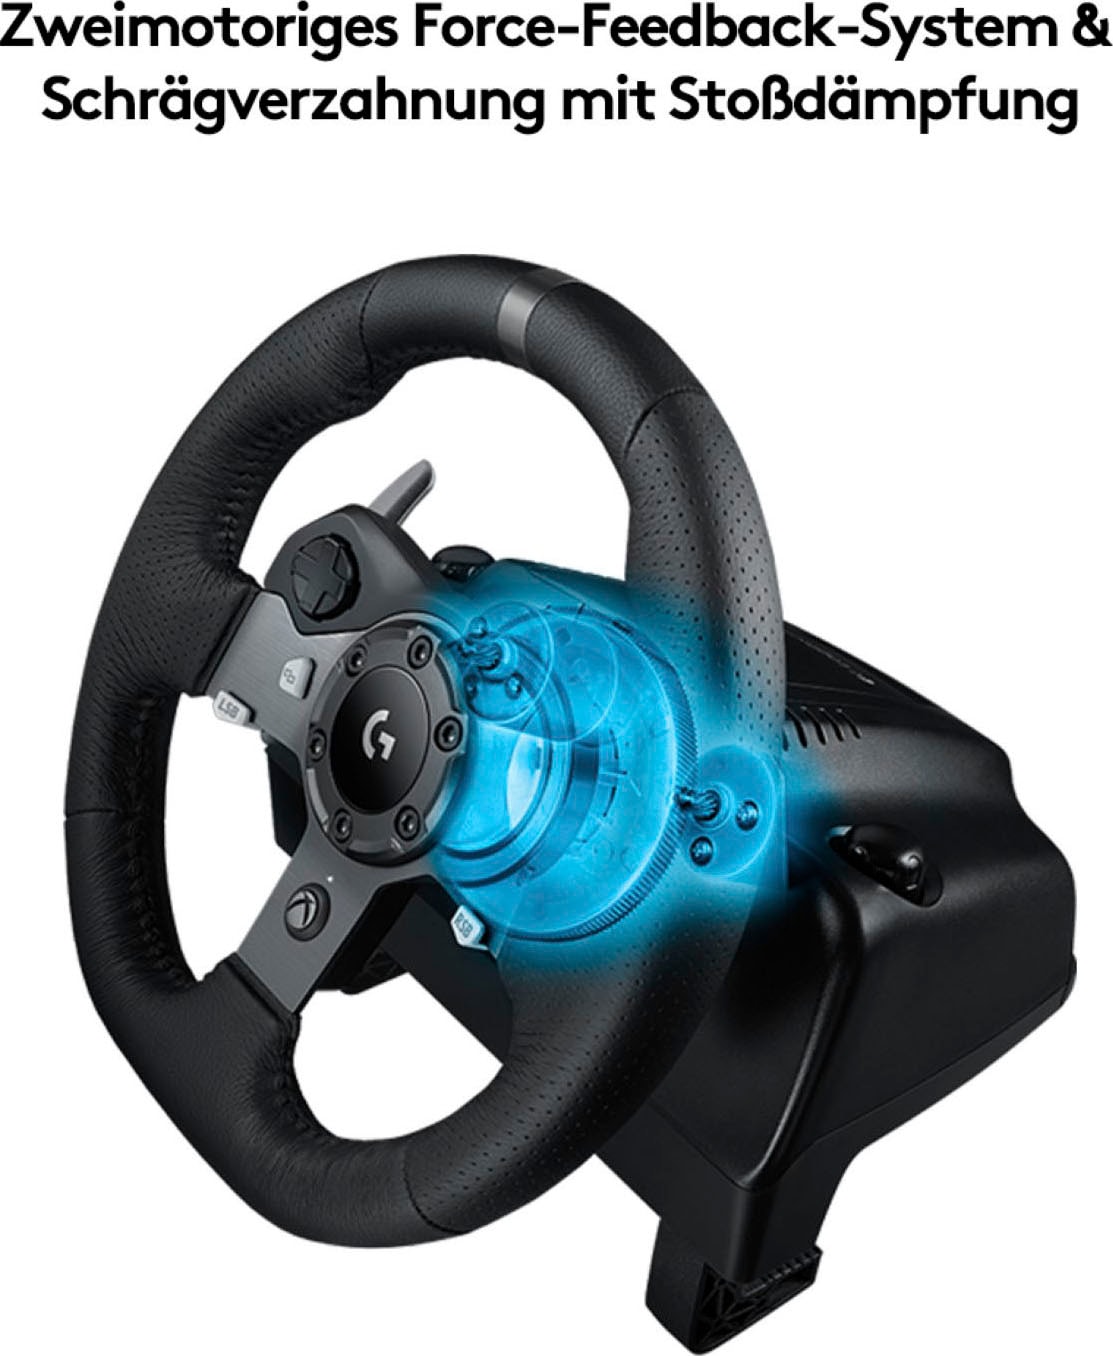 Logitech G Gaming-Lenkrad »G920 Driving Force Racing Wheel USB